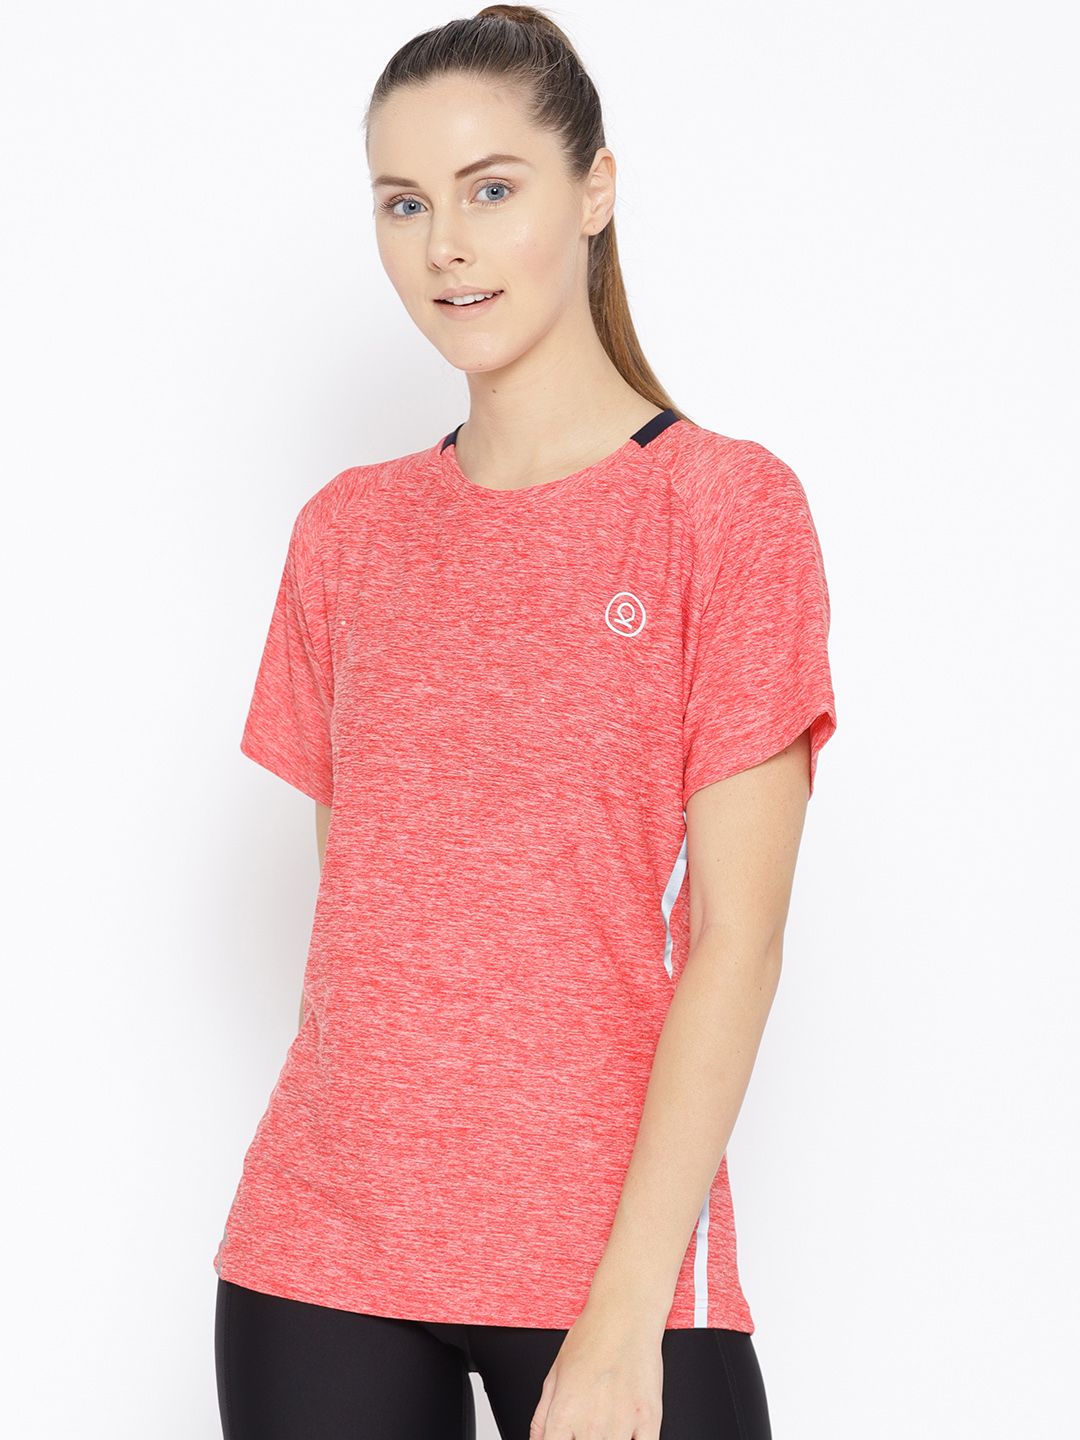 Chkokko Women Coral Pink Self Design Round Neck Training T-shirt Price in India